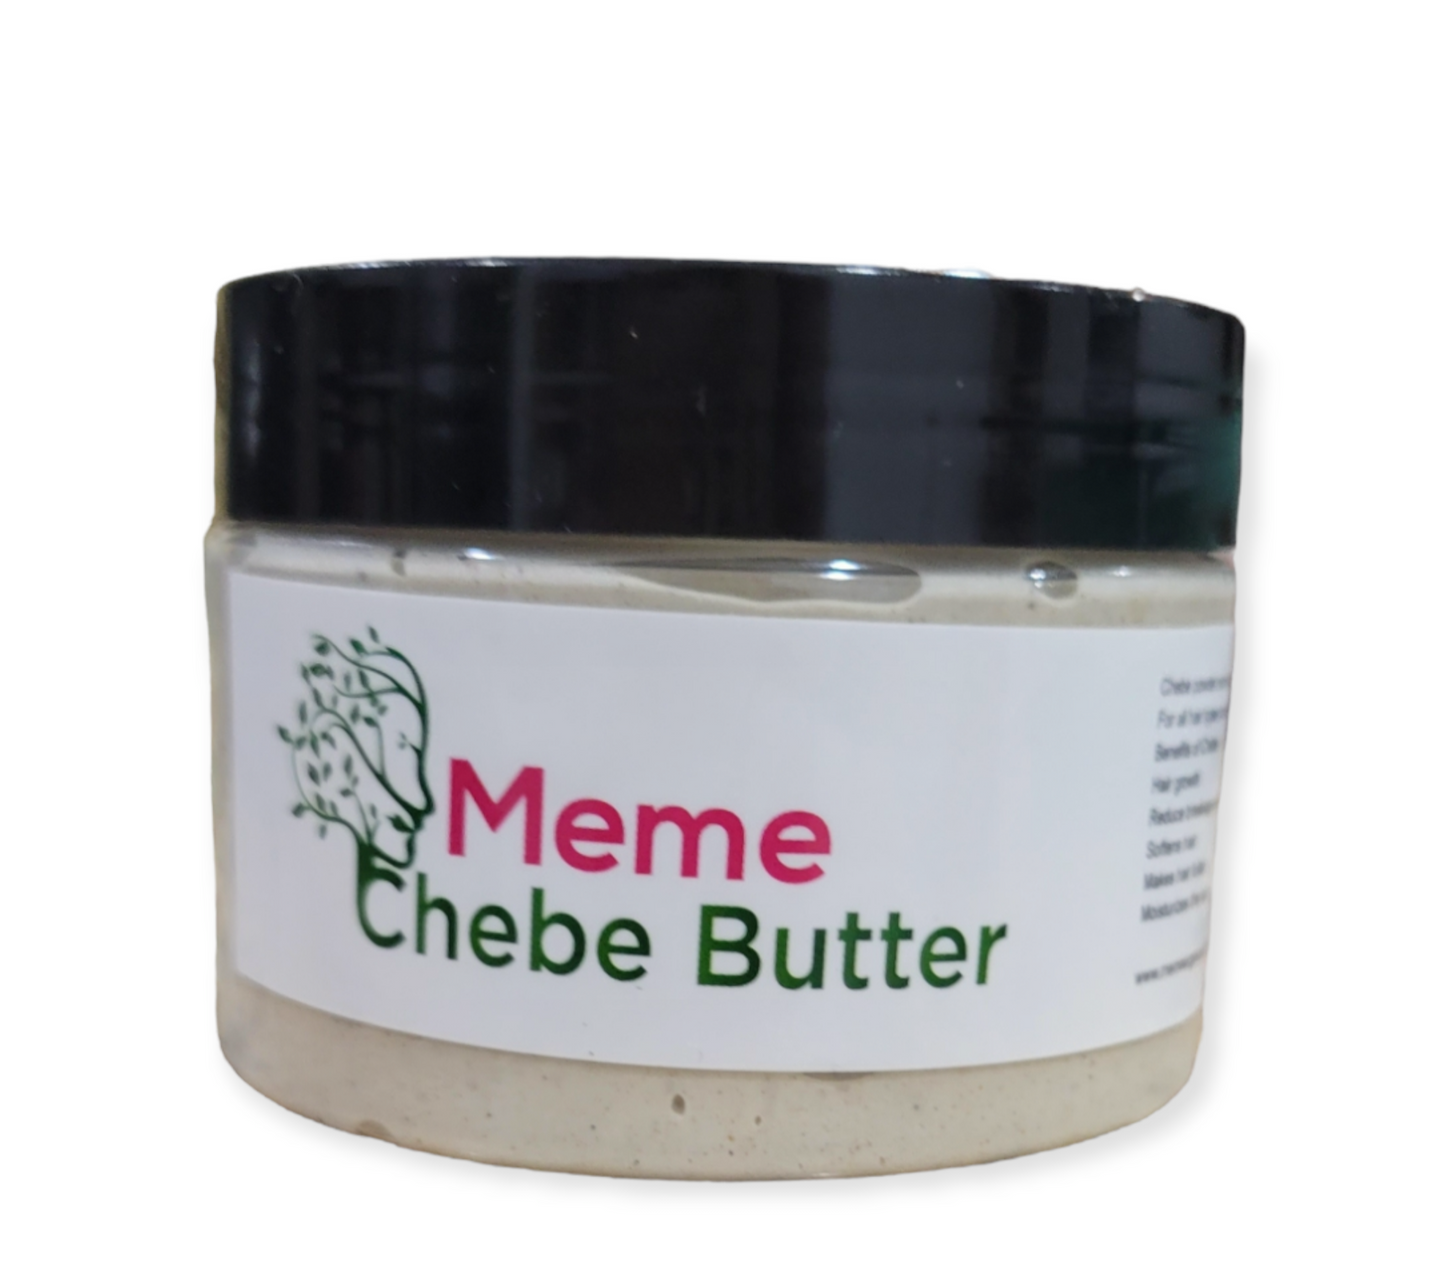 Meme Chebe Butter